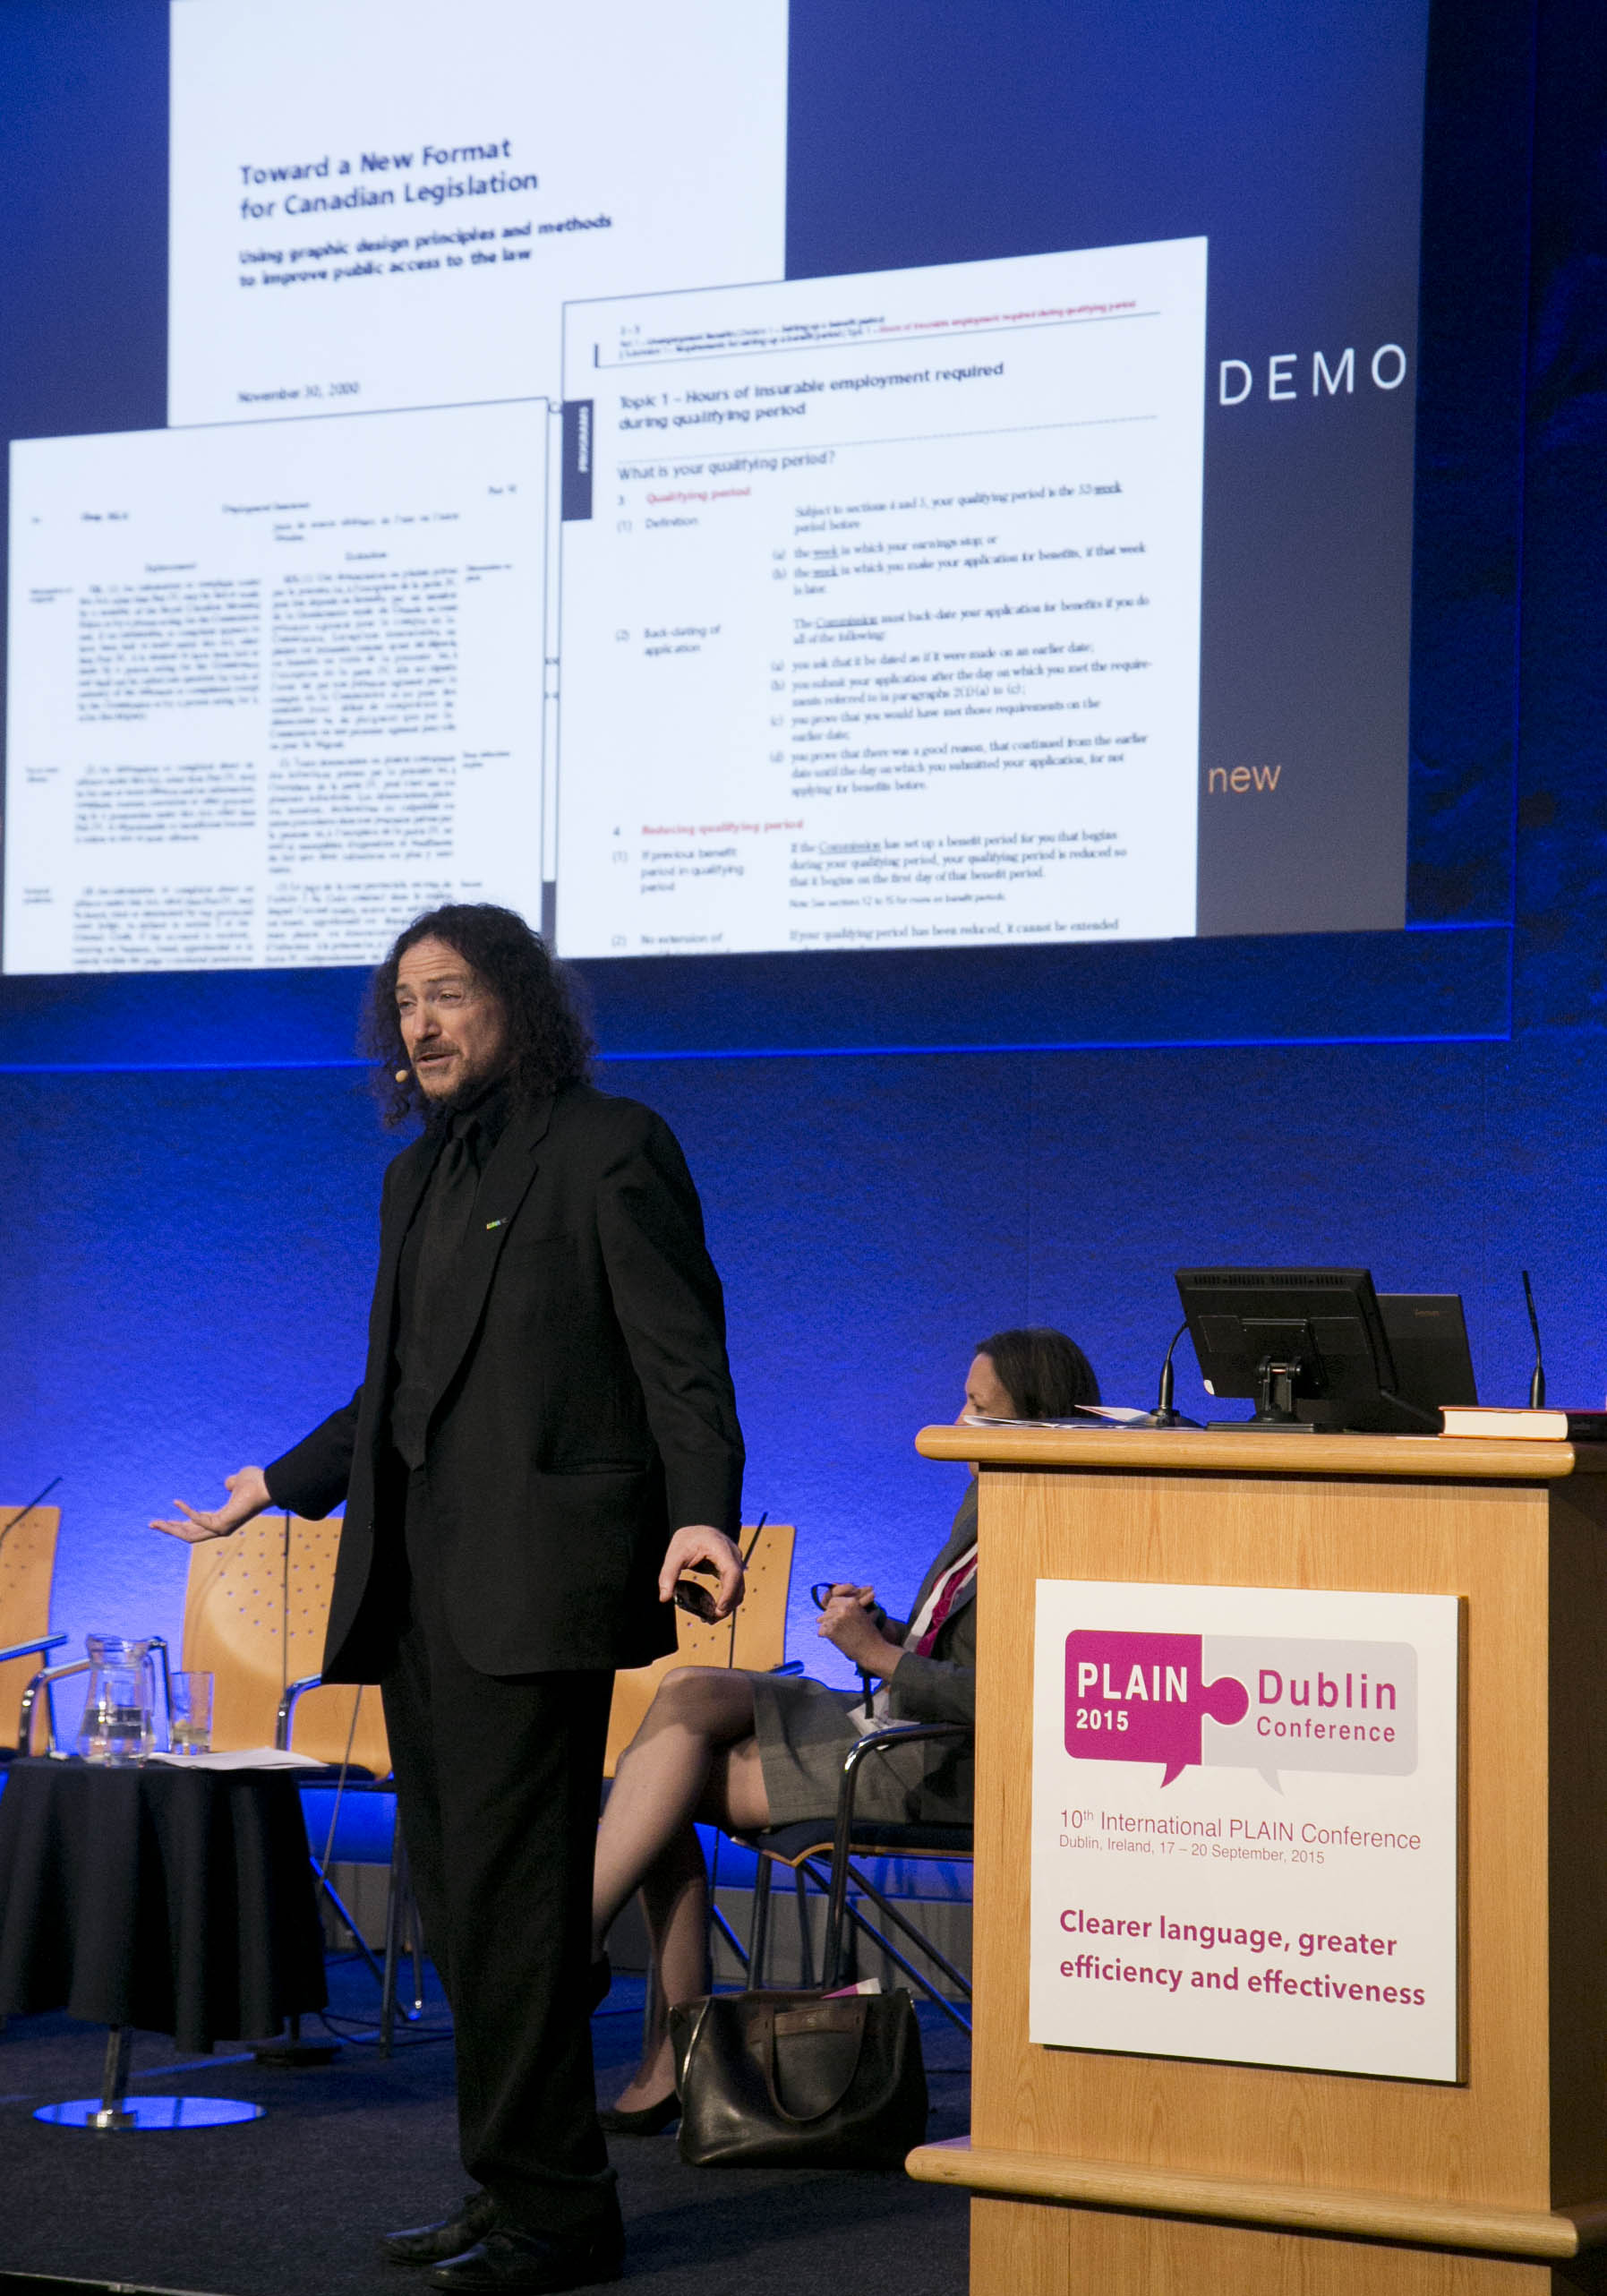 photo of David Berman speaking on stage at PLAIN 2015 Dublin podium